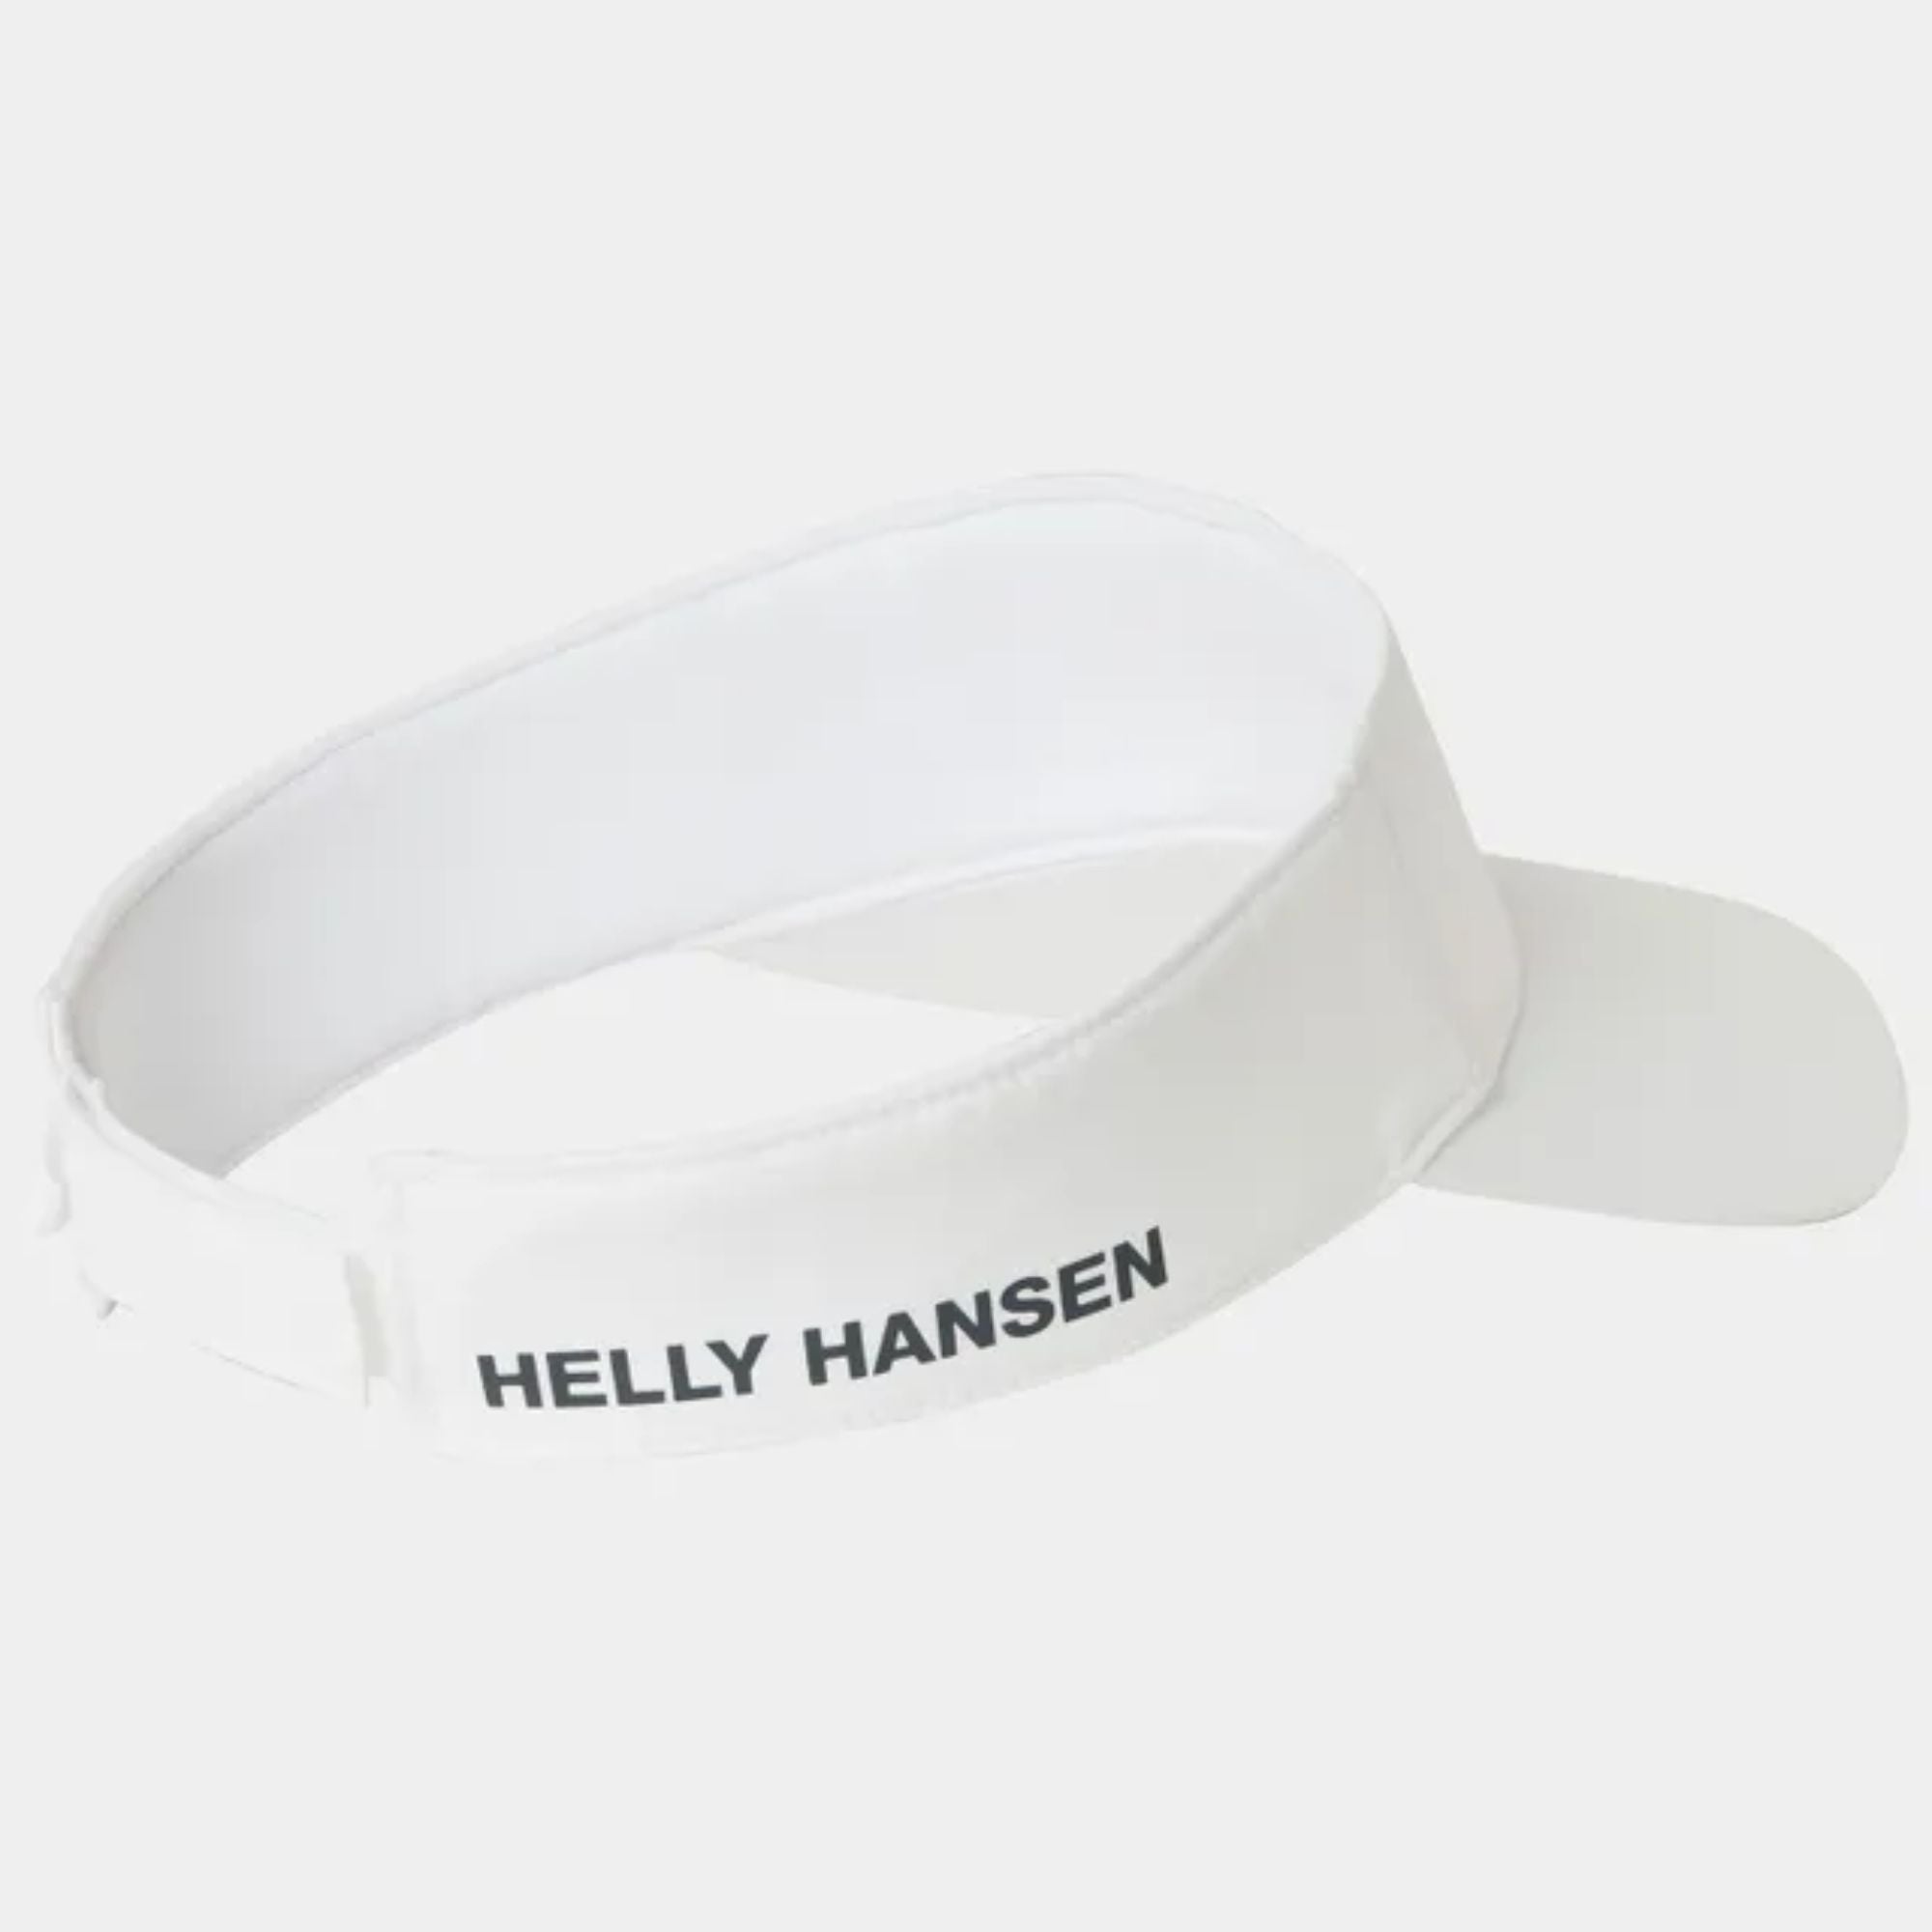 Helly Hansen Crew Visor 2.0 | HELLY HANSEN | Portwest - The Outdoor Shop